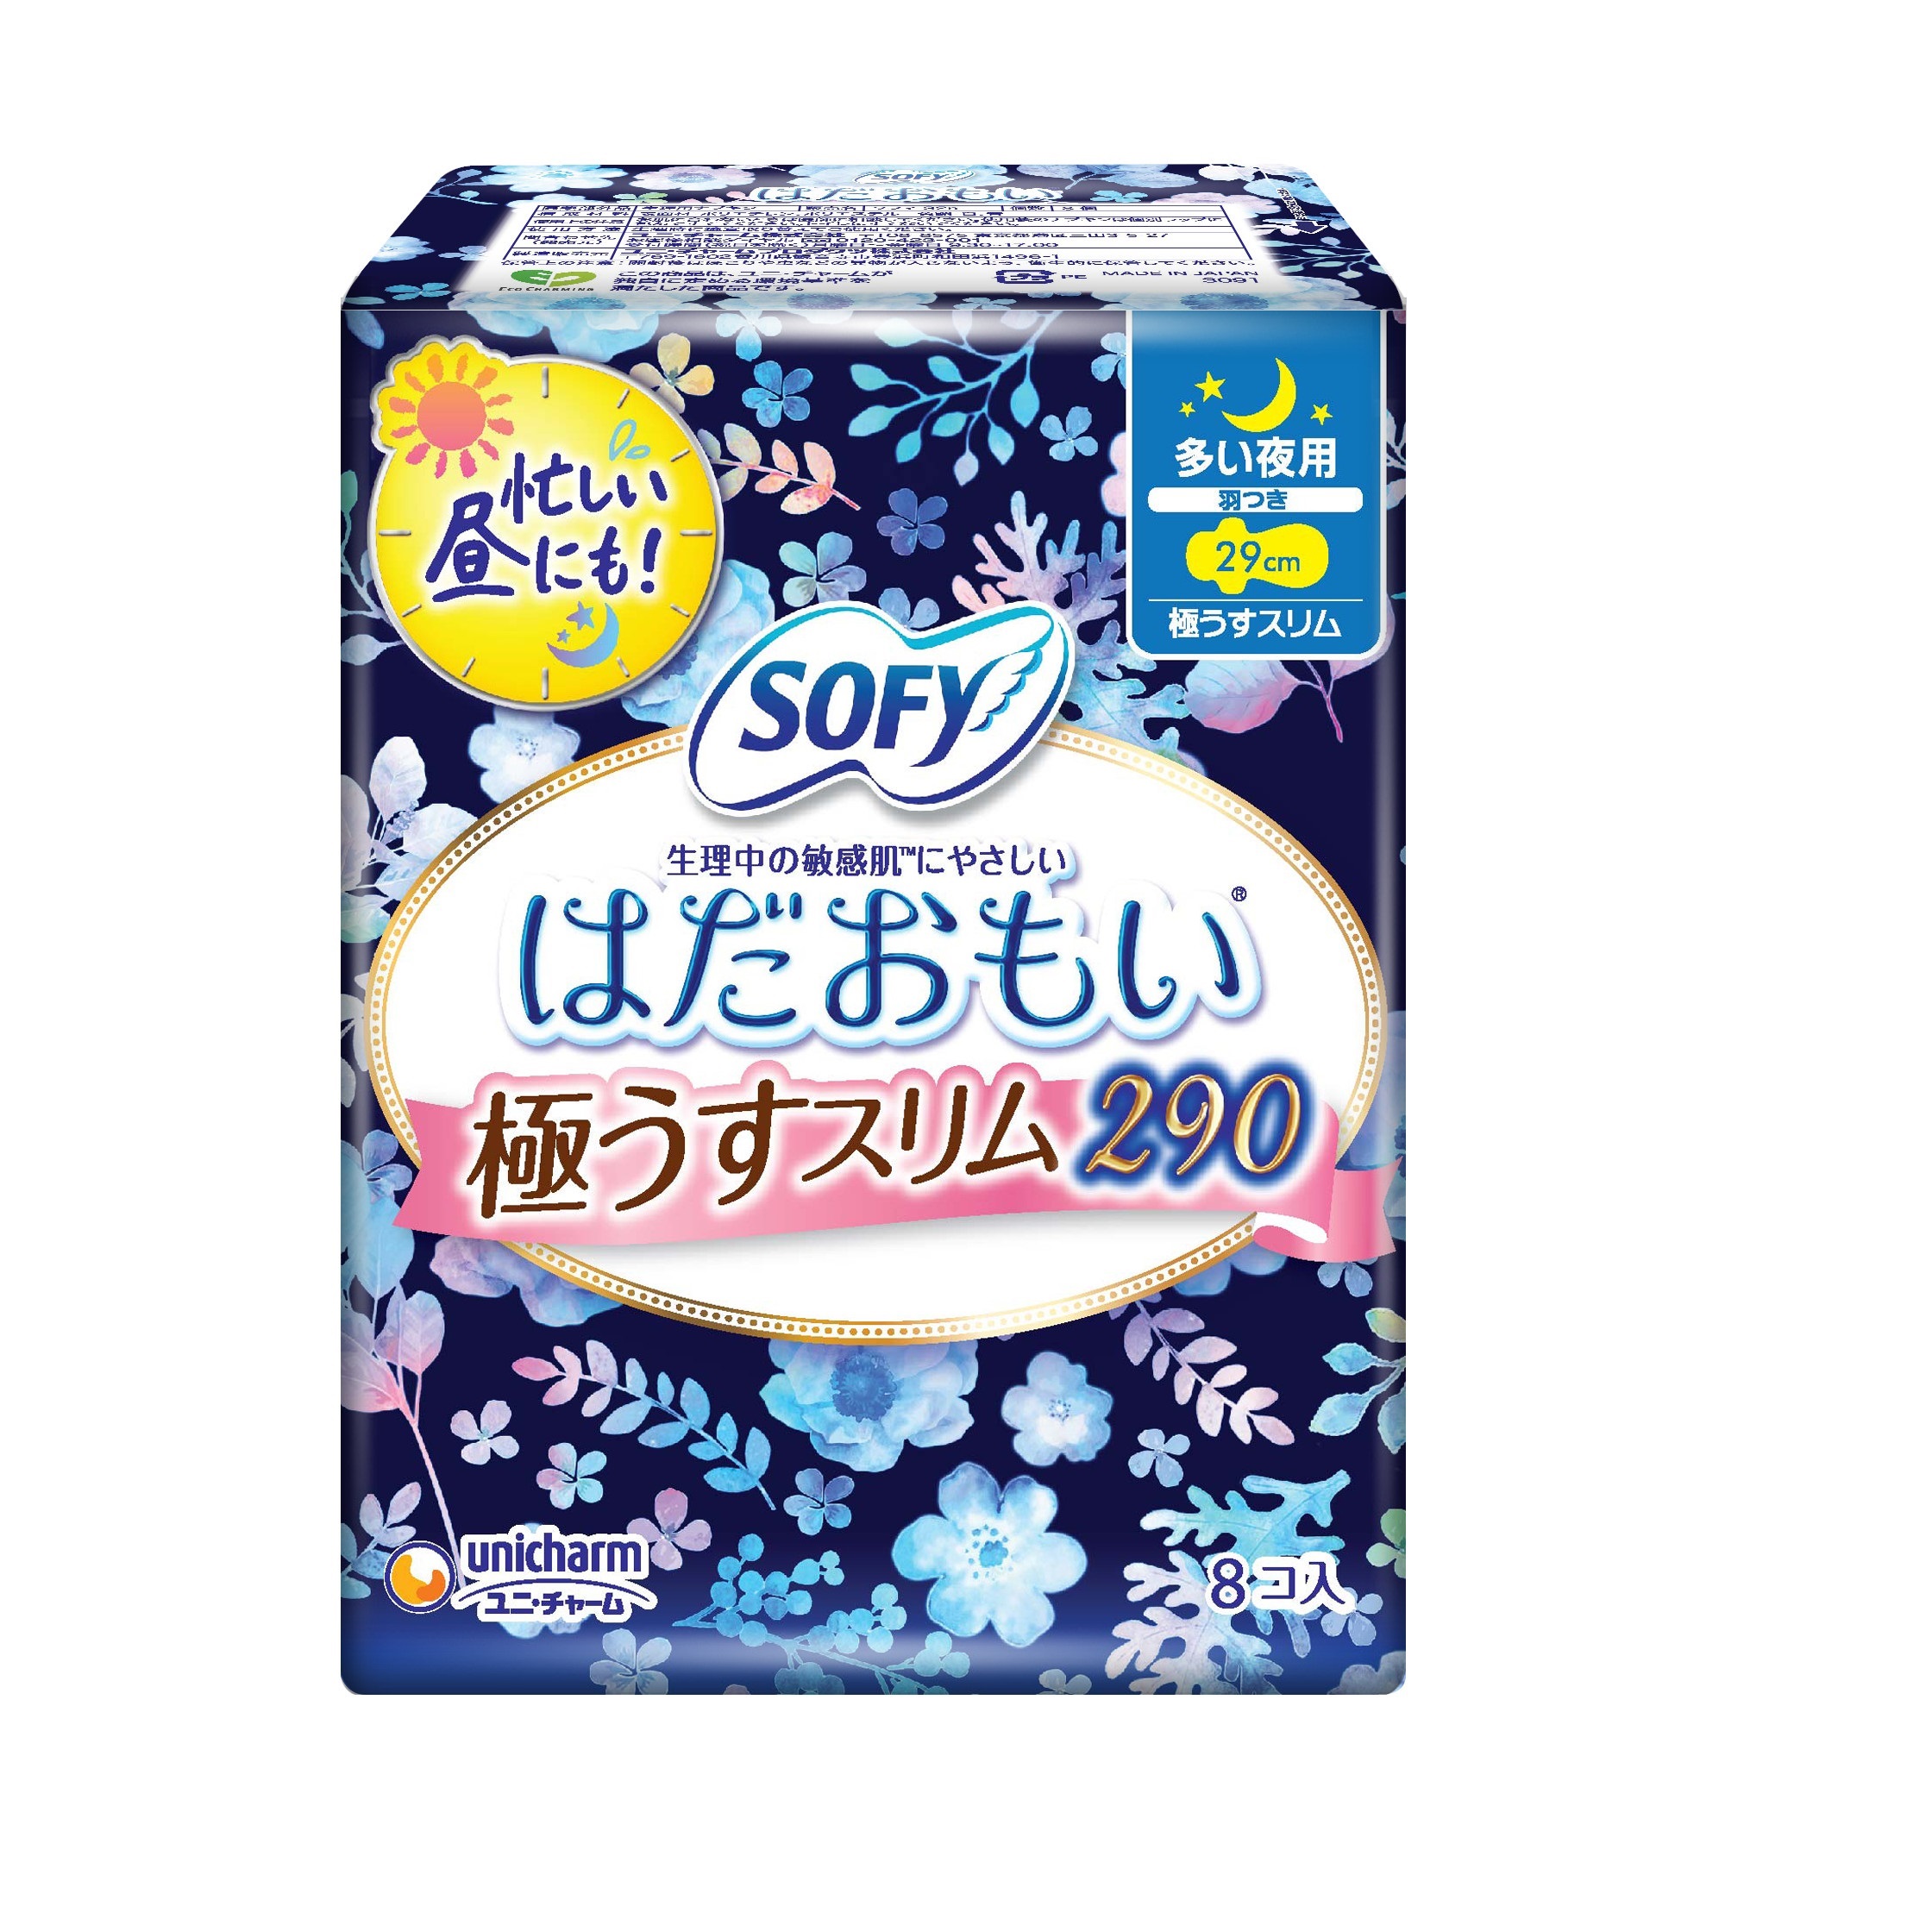 Sofy Skin Comfort Ultra Thin 29cm